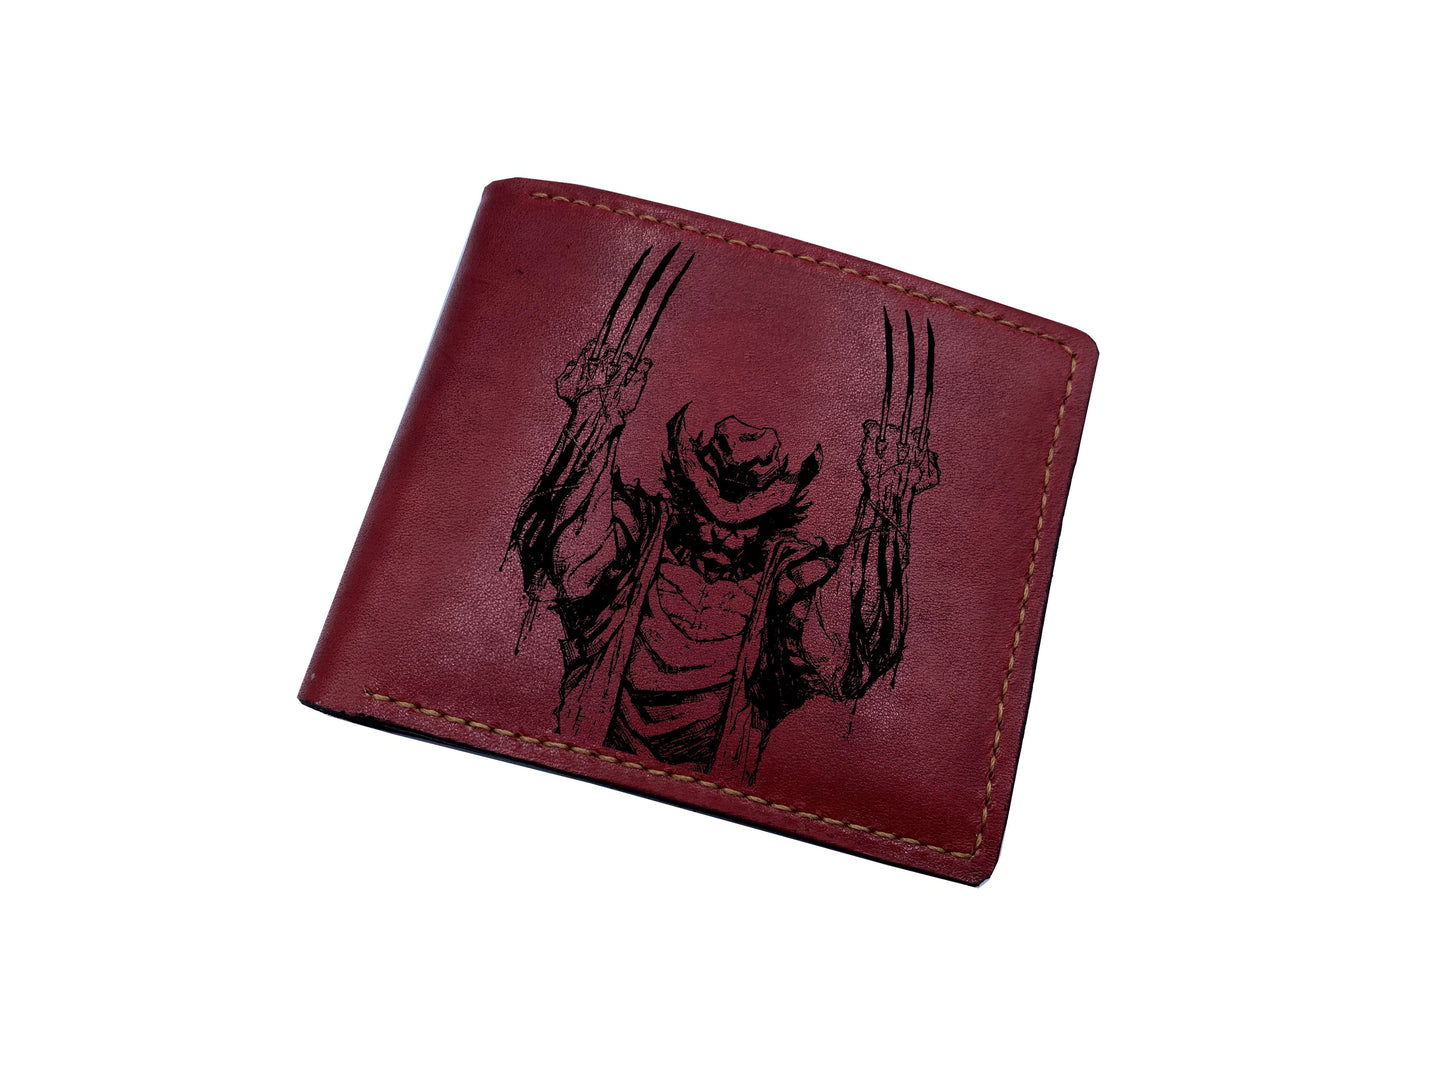 Mayan Corner - Wolverine Xmen superheroes leather handmade wallet, Personalized leather wallet for men - 2710228